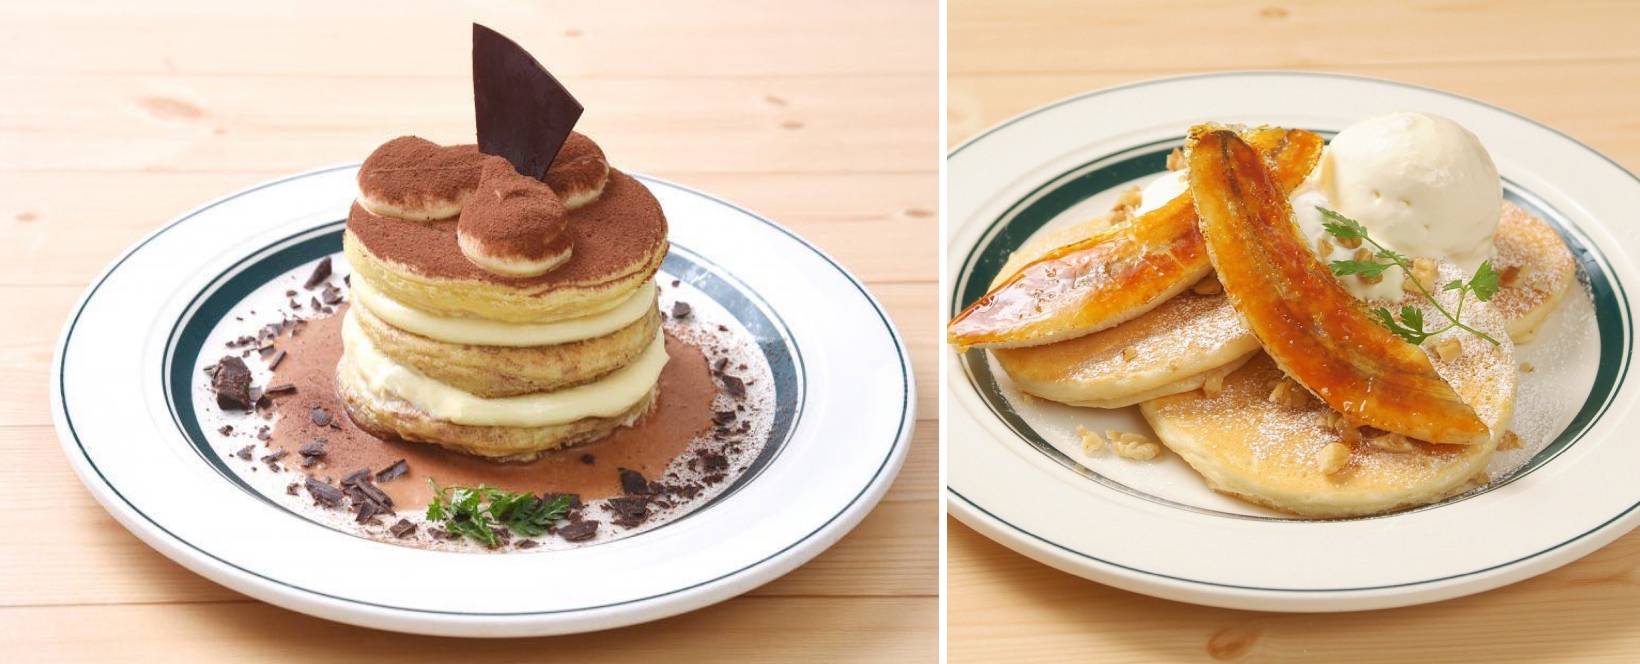 Gram Cafe and Pancakes in BGC branch - sweet pancakes